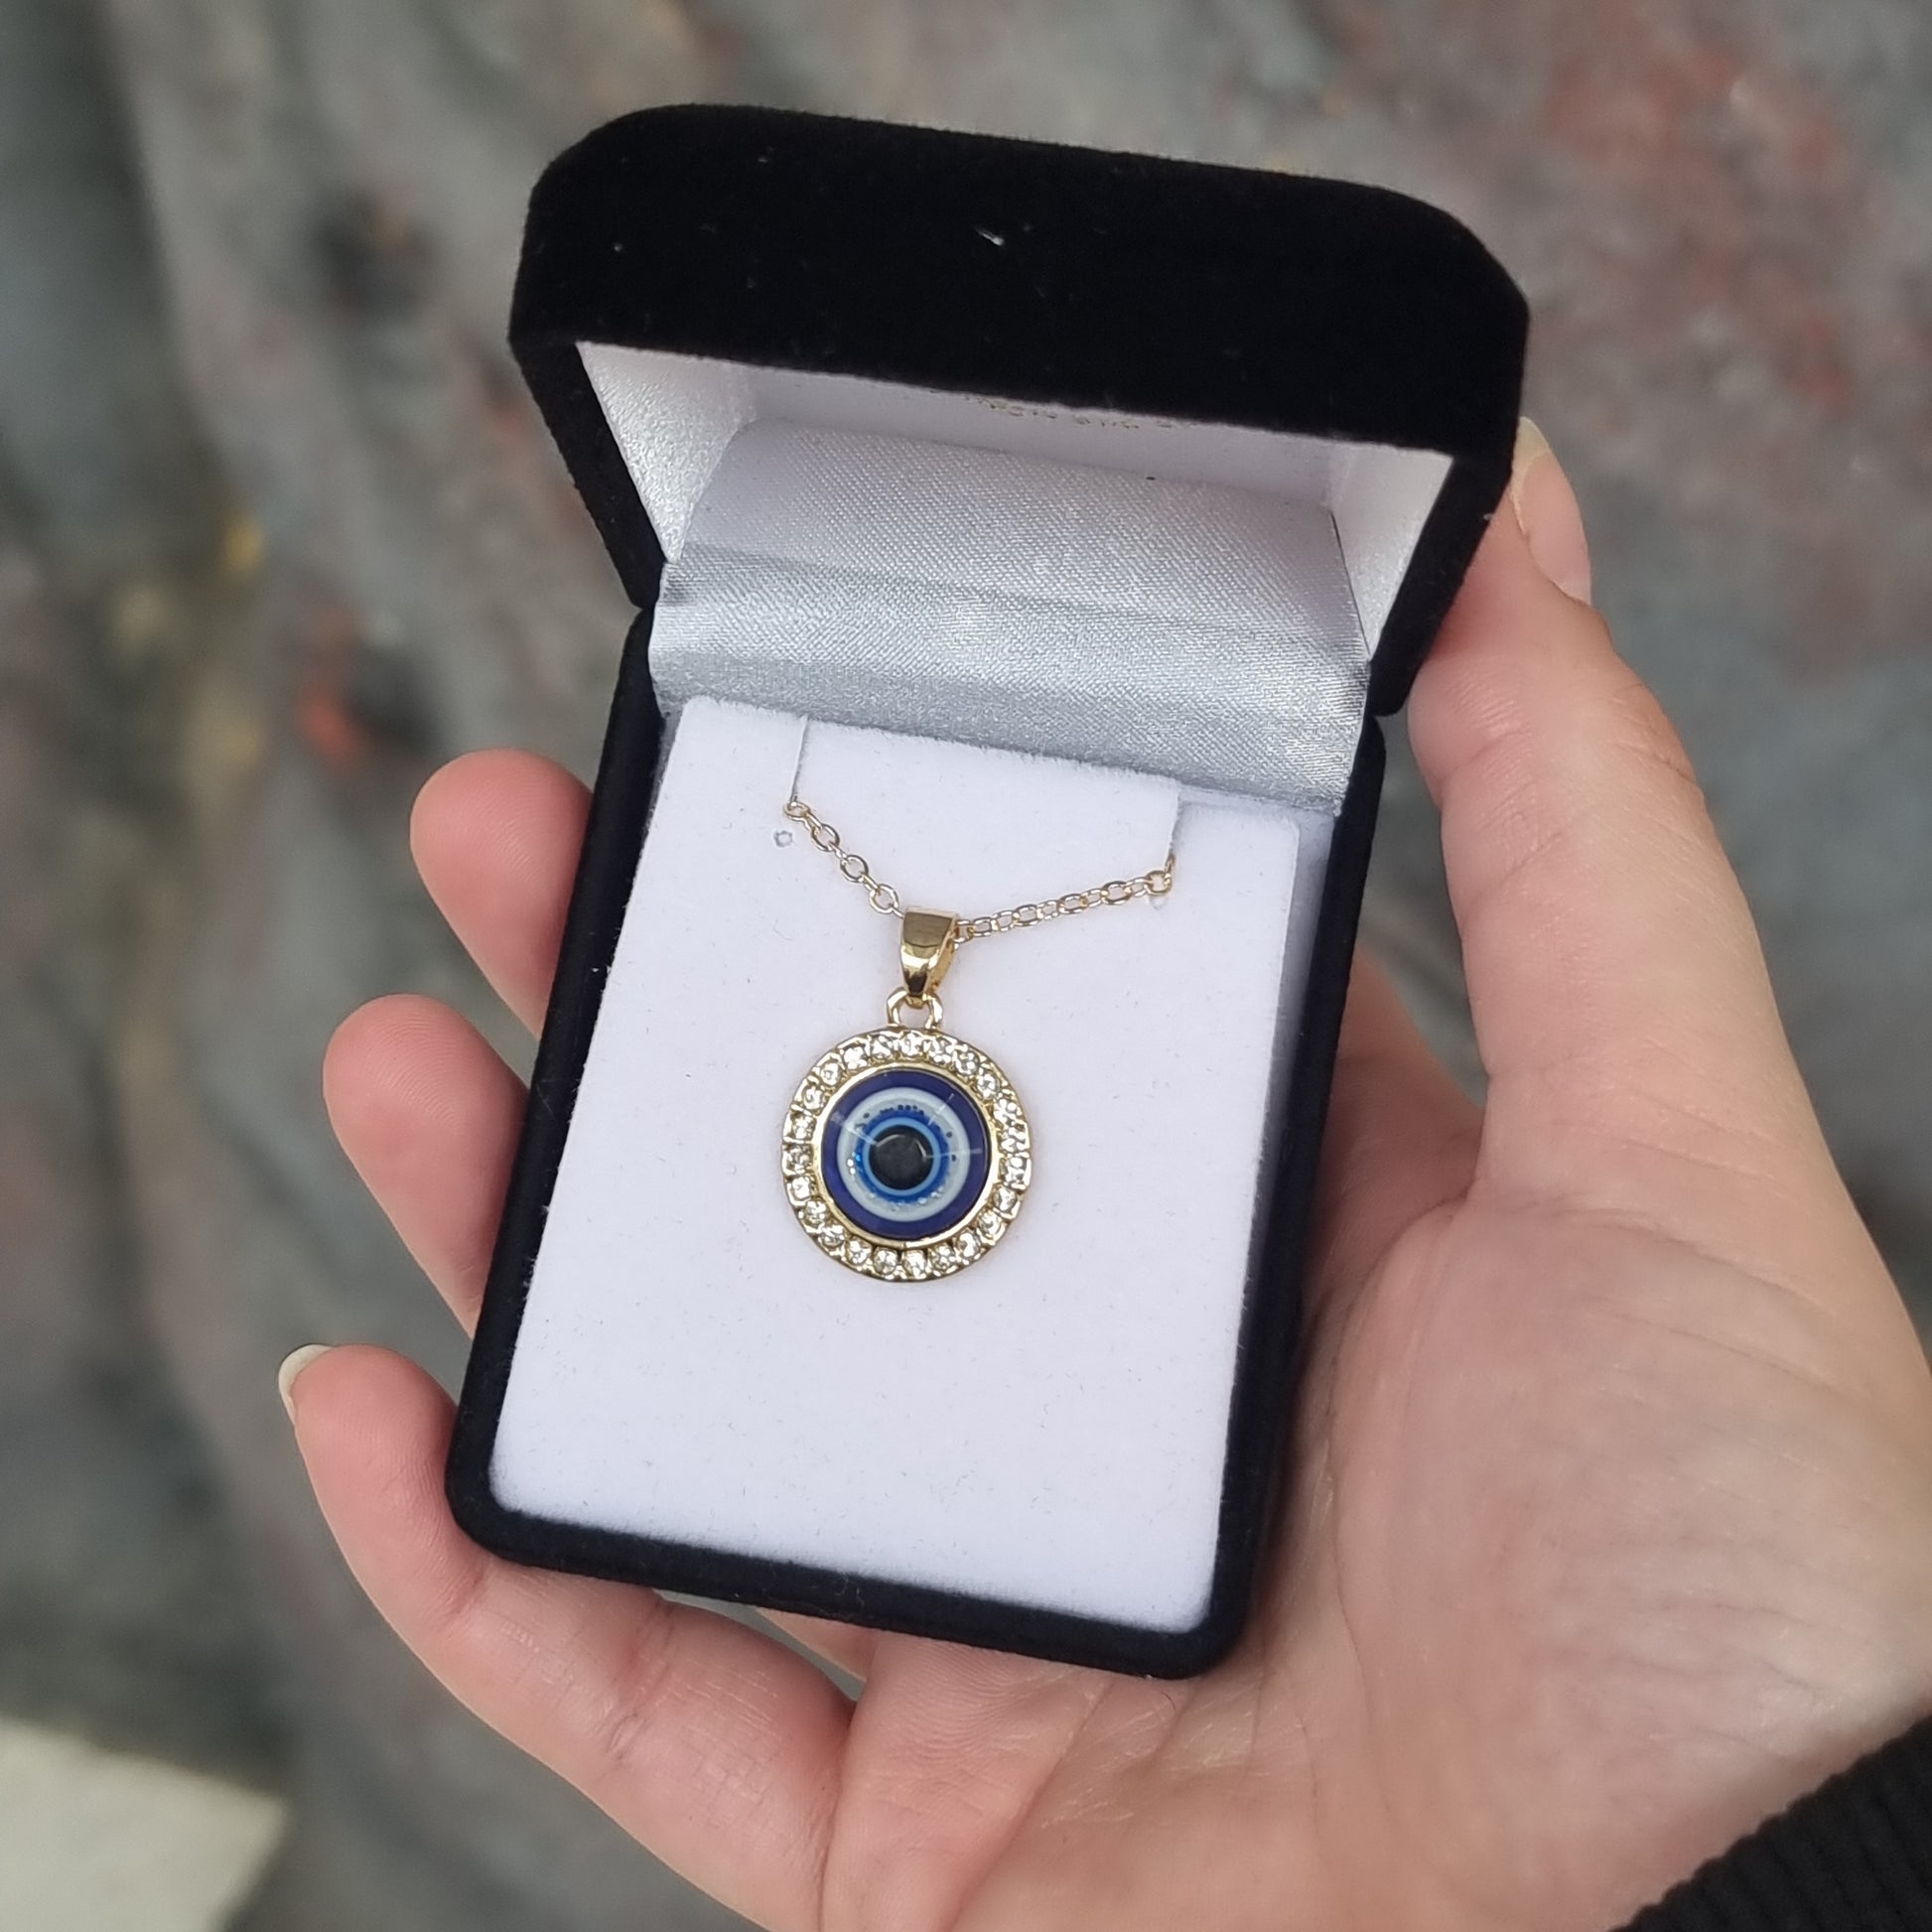 Evil eye round pendant - gold - Rivendell Shop